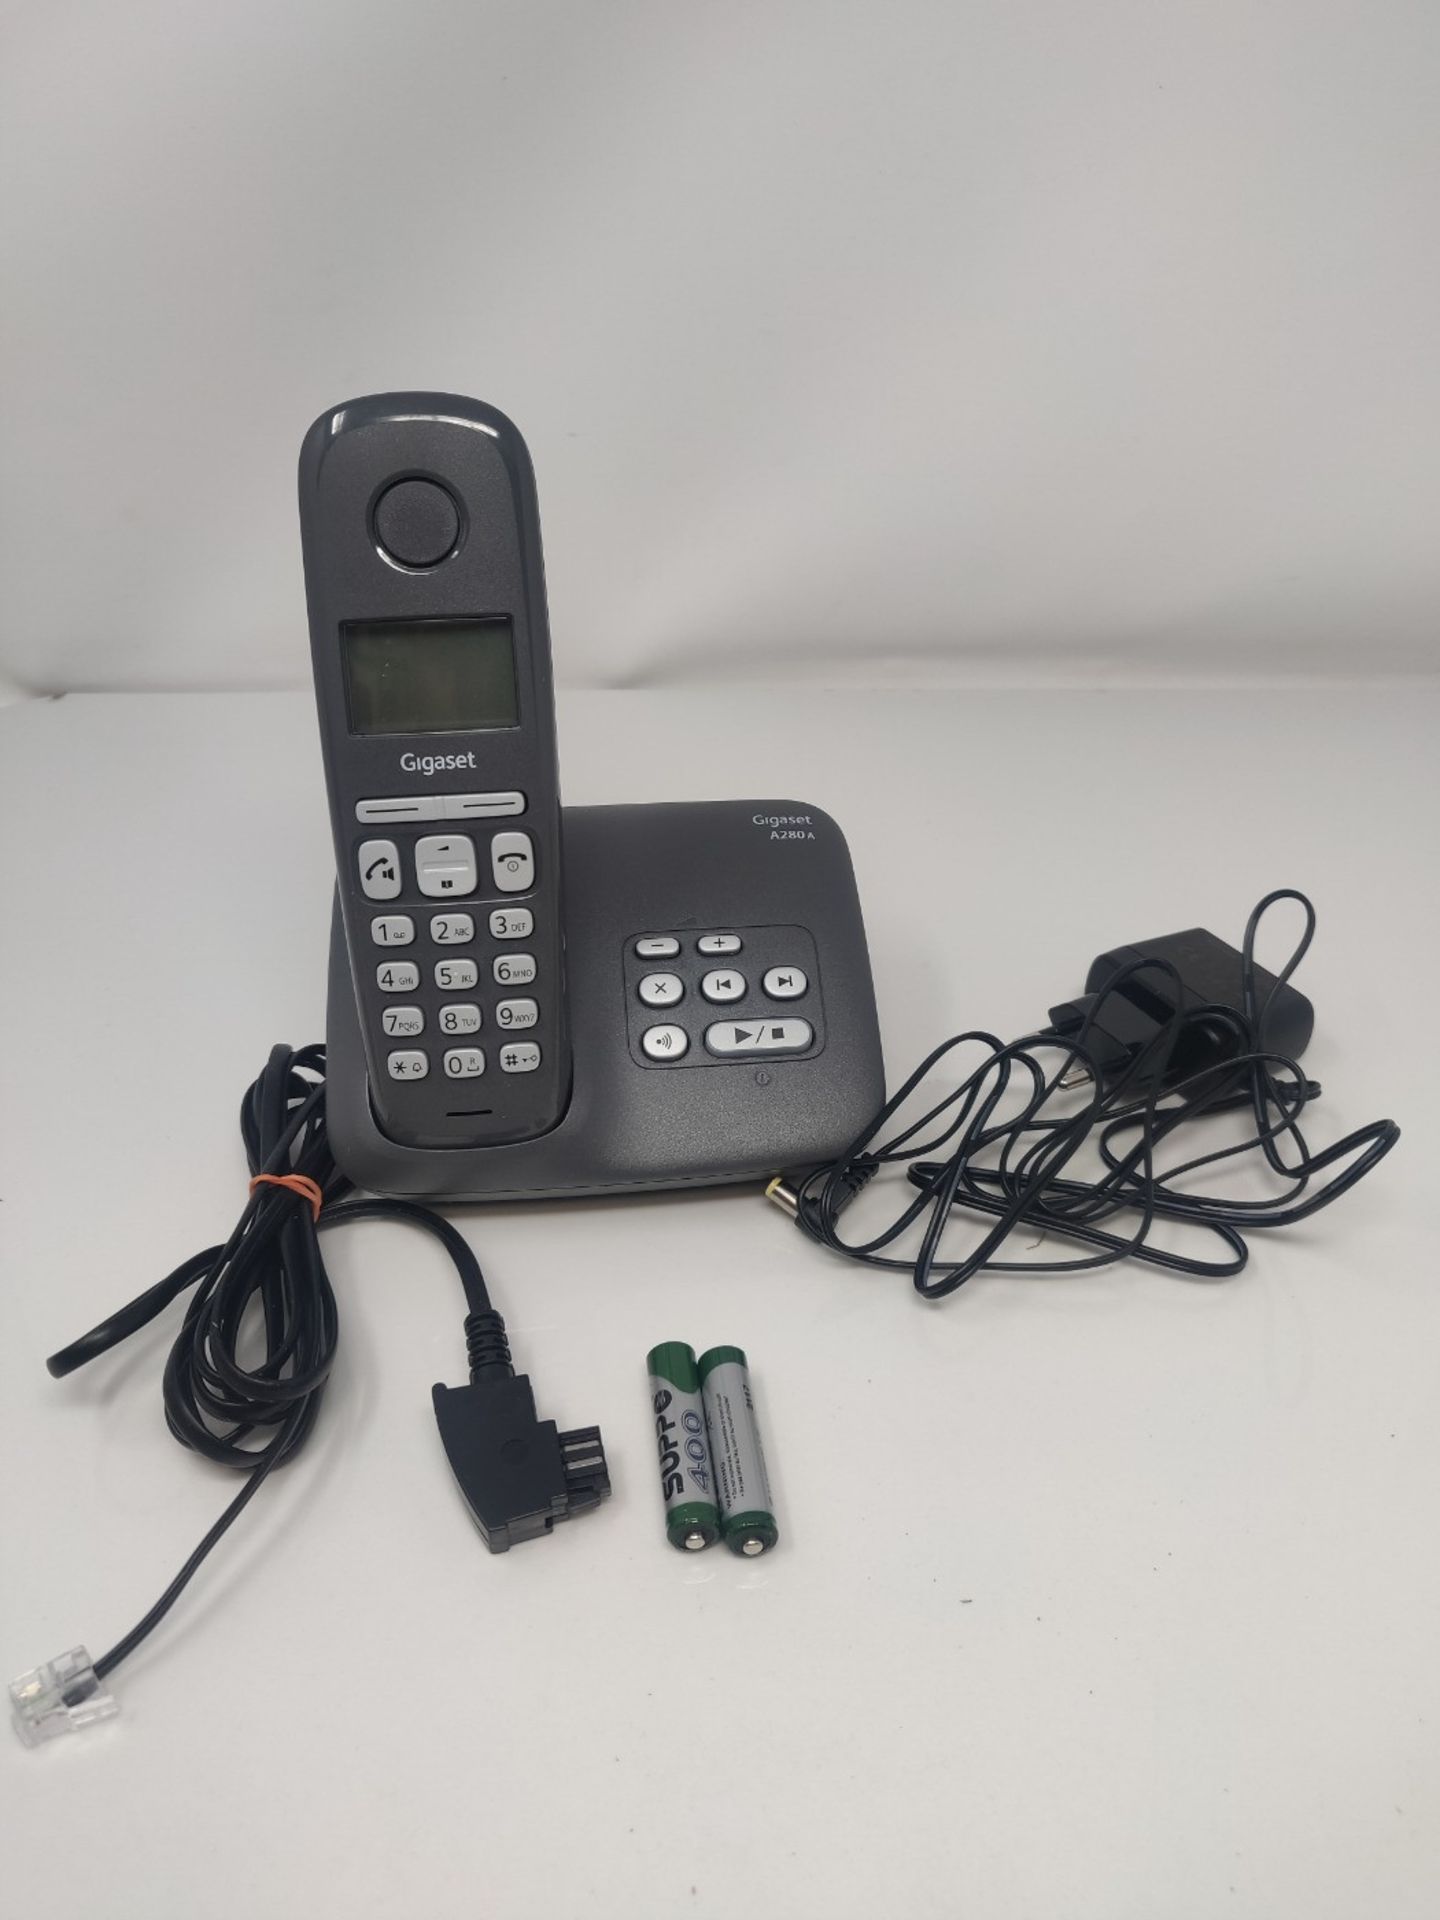 Gigaset A280A - Schnurloses Telefon mit Anrufbeantworter - brillante AudioqualitÃ¤t - Image 2 of 2